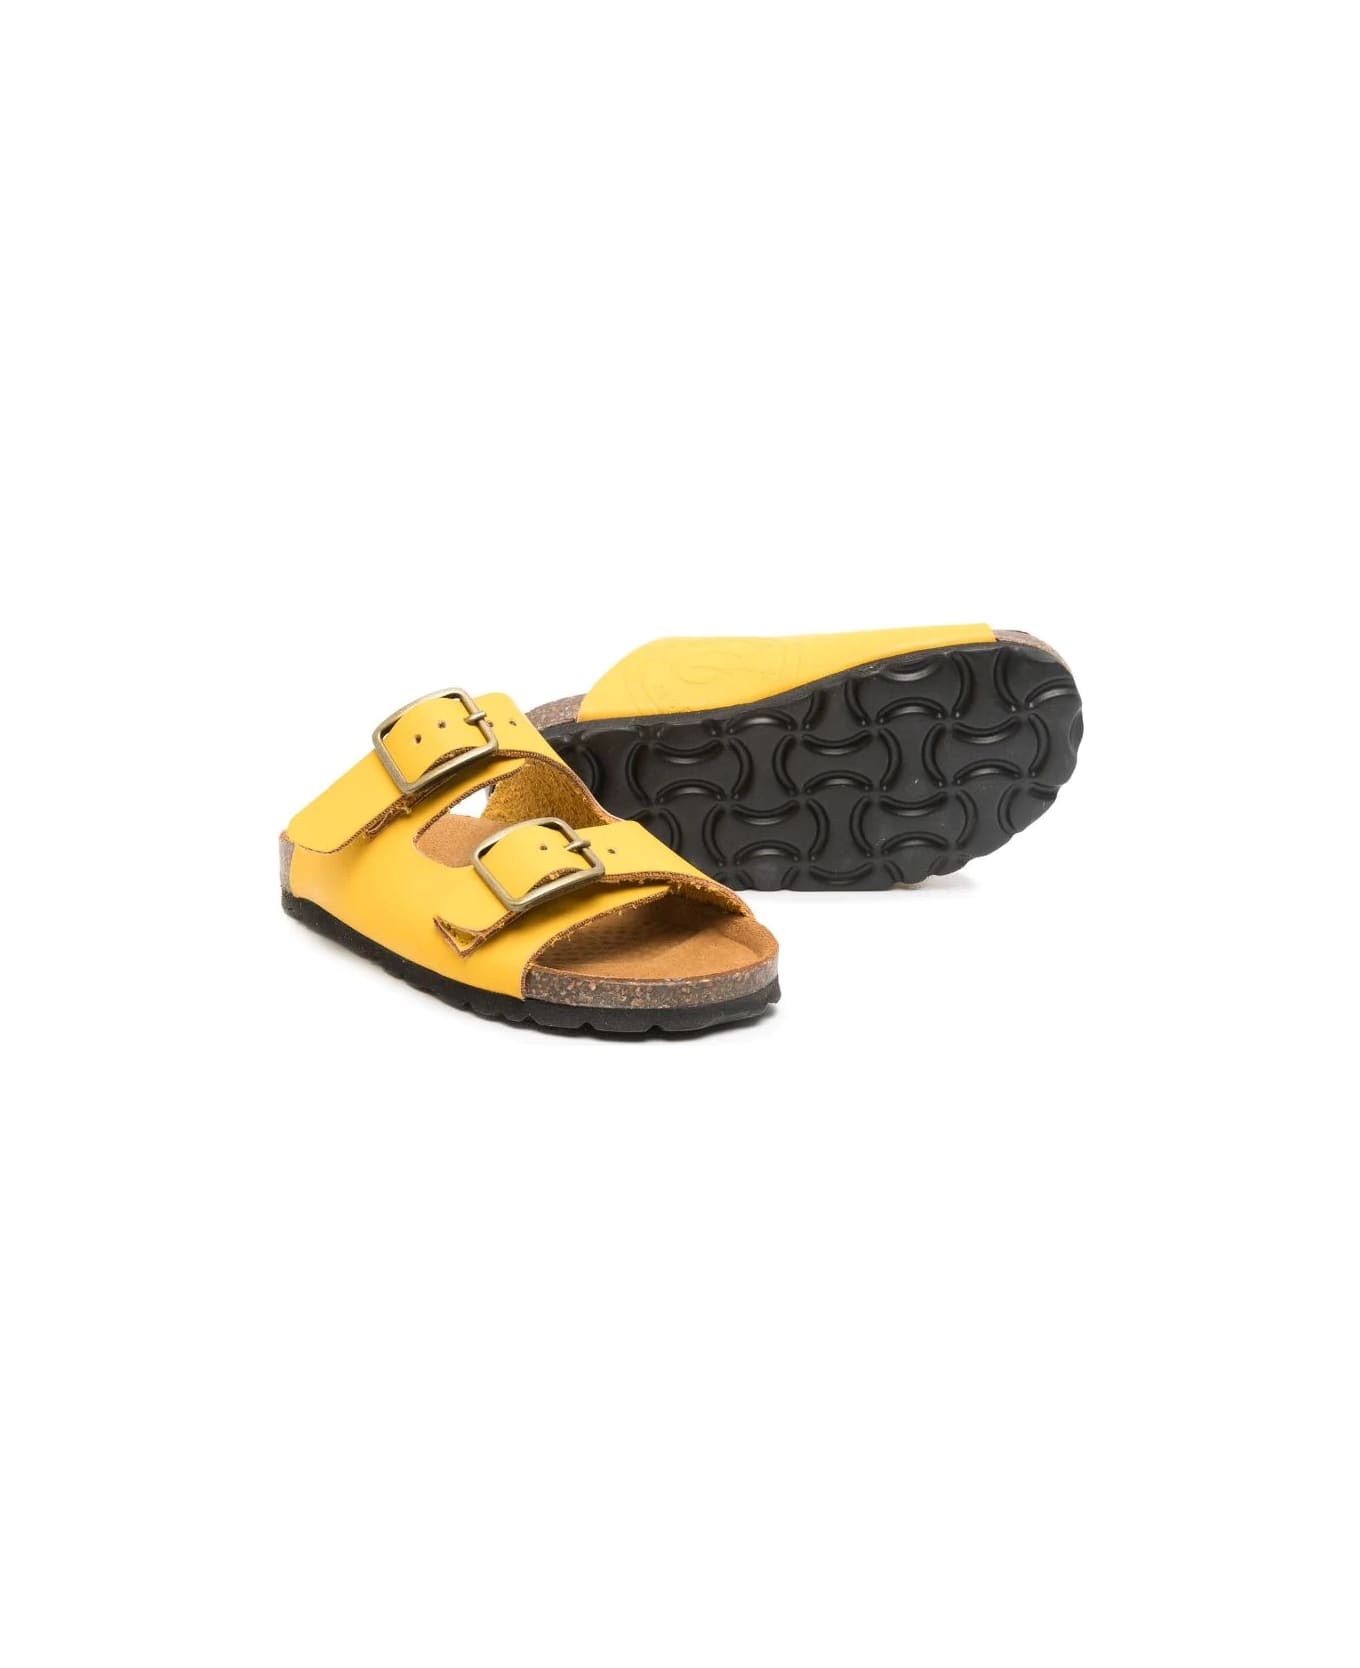 Gallucci Yellow Sandals - Yellow